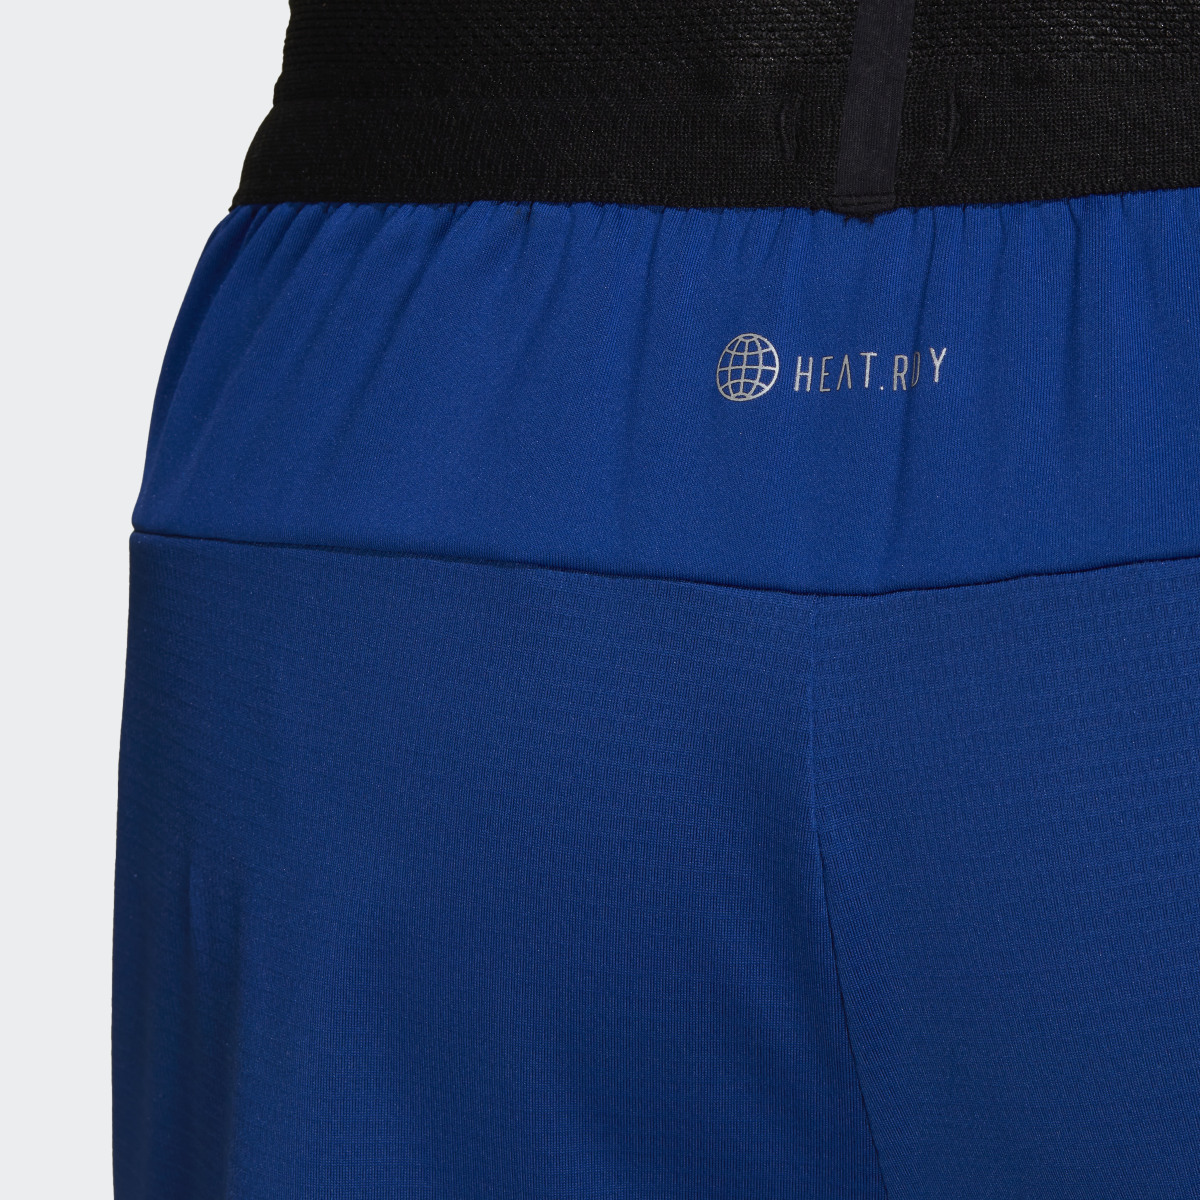 Adidas Designed for Training HEAT.RDY HIIT Shorts. 6